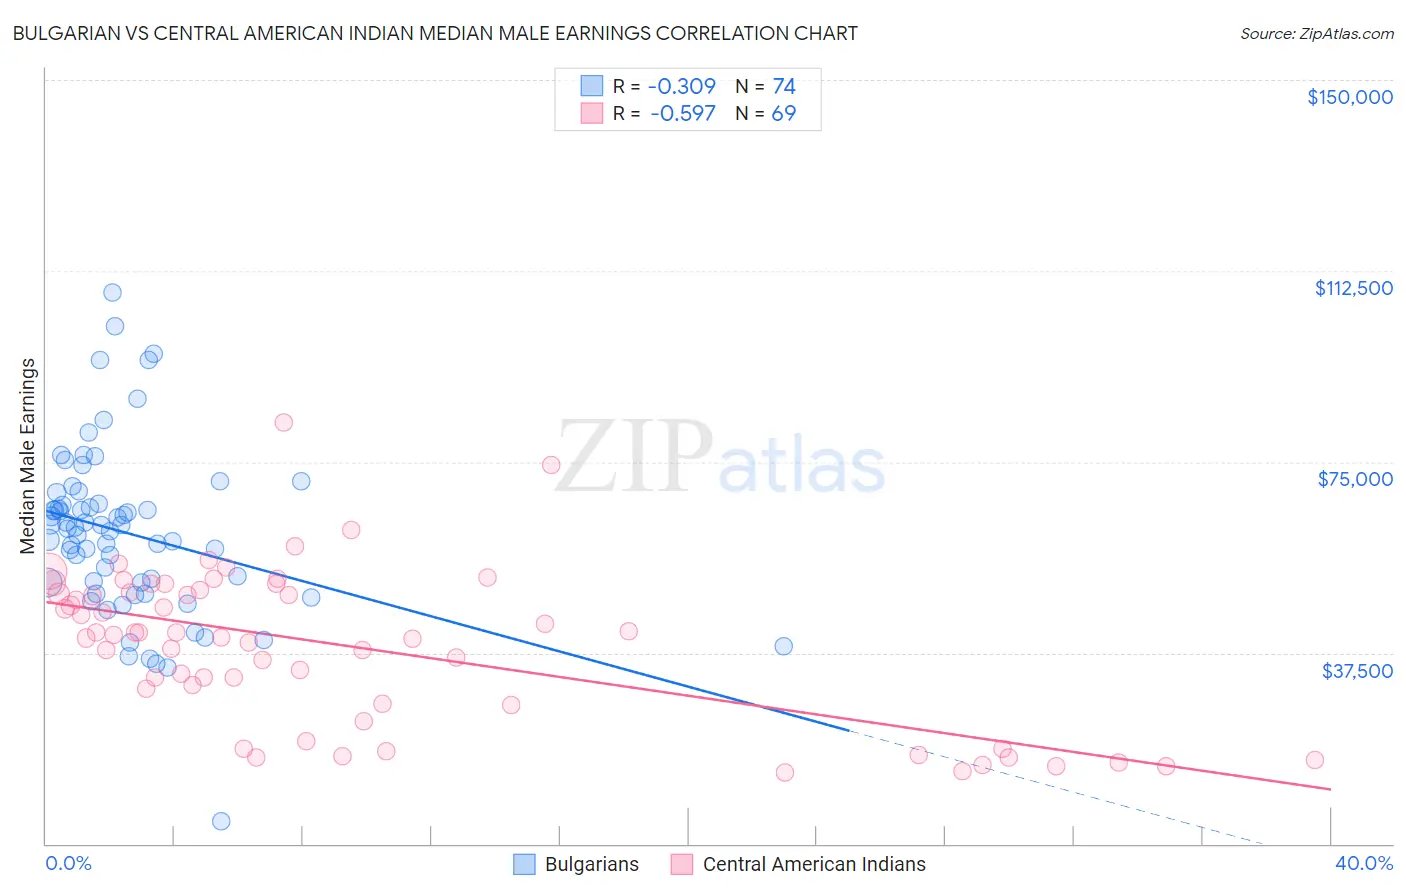 Bulgarian vs Central American Indian Median Male Earnings